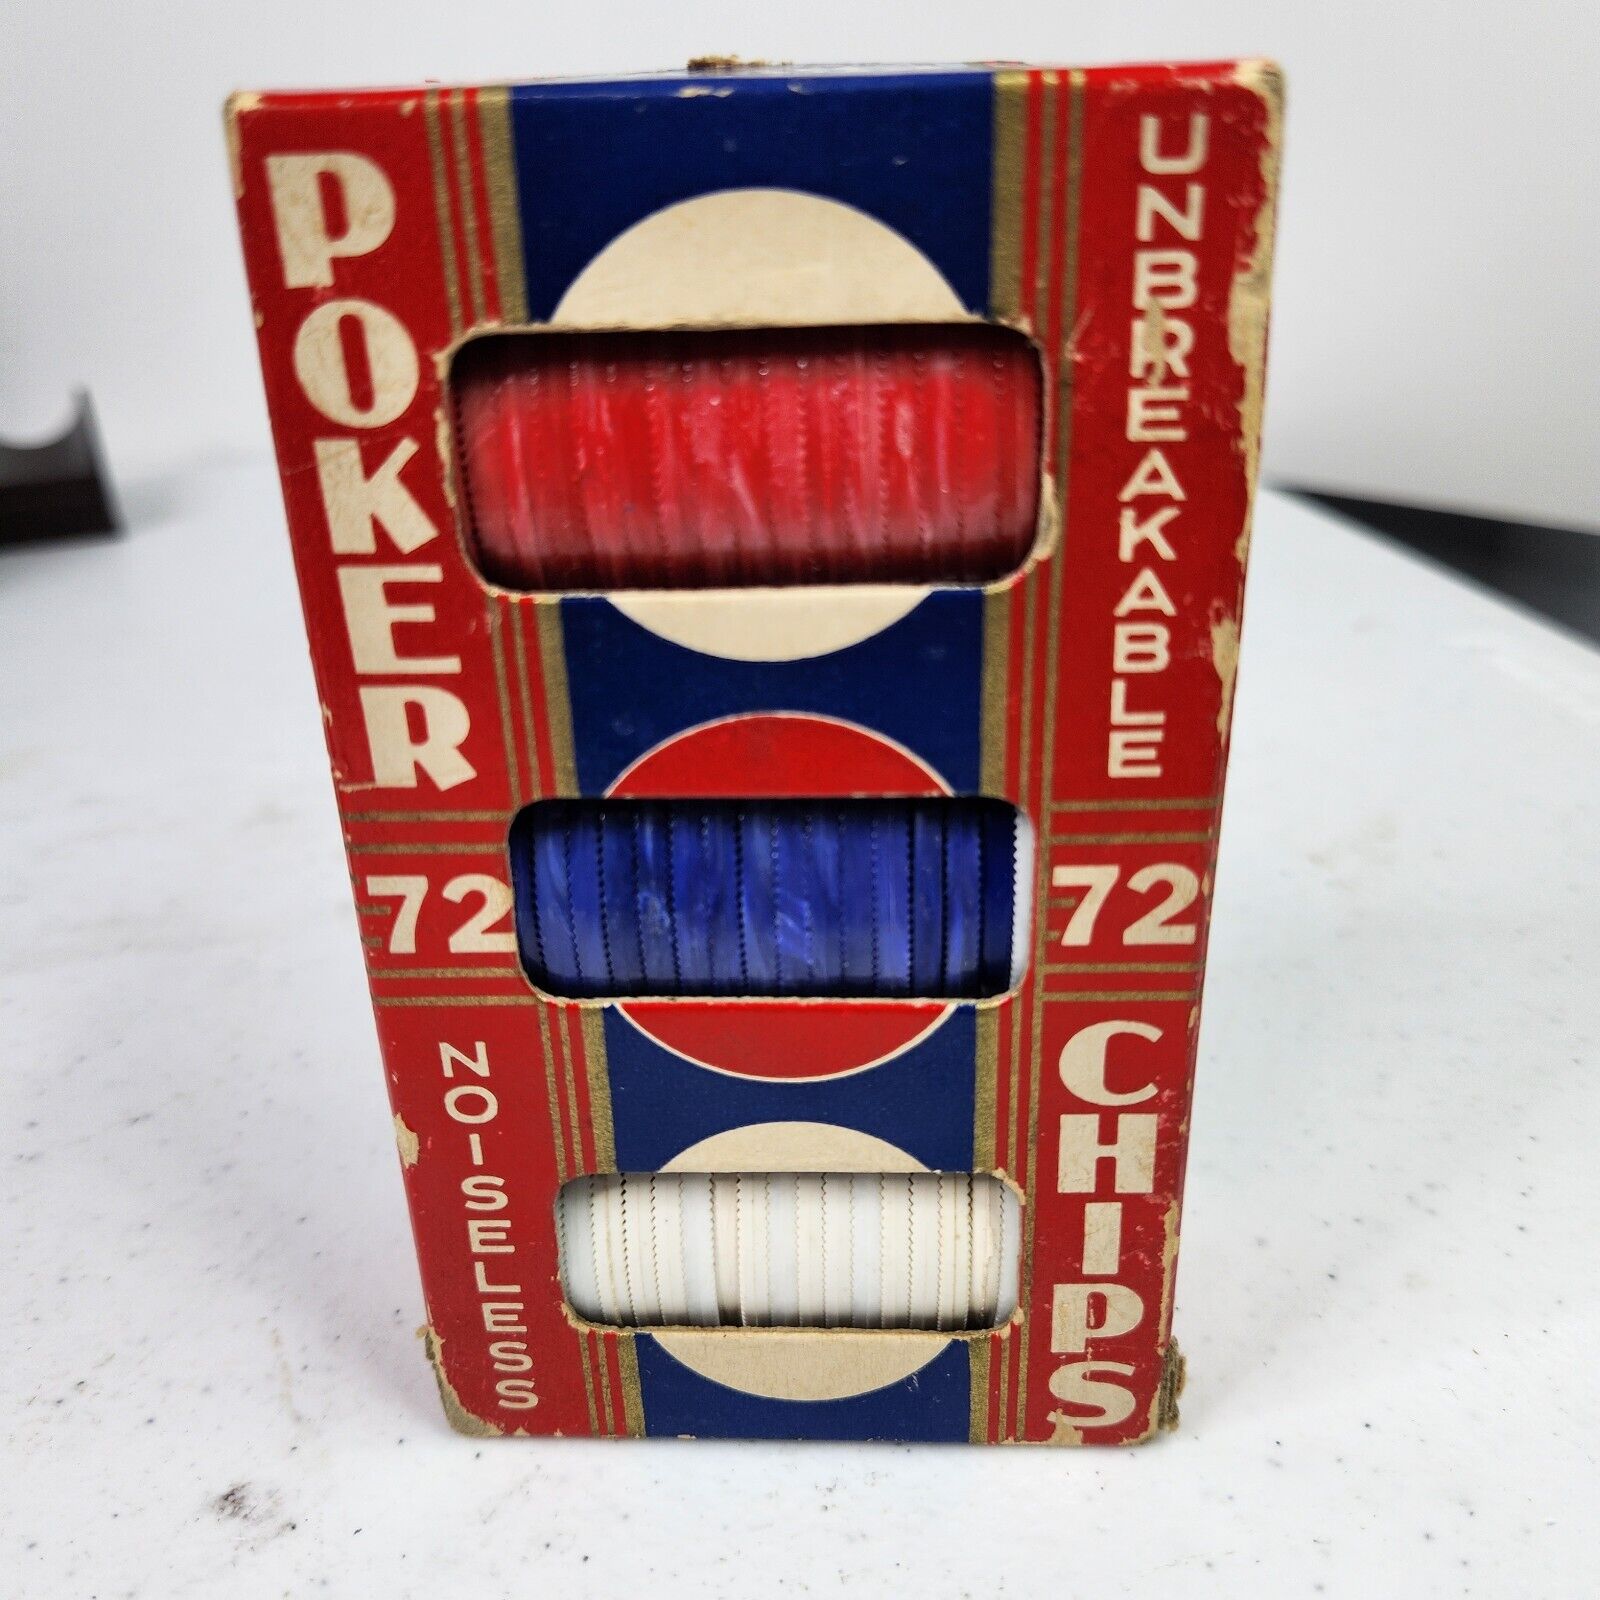 Vintage Unbreakable Noiseless Poker Chips Set  Red, White & Blue #72